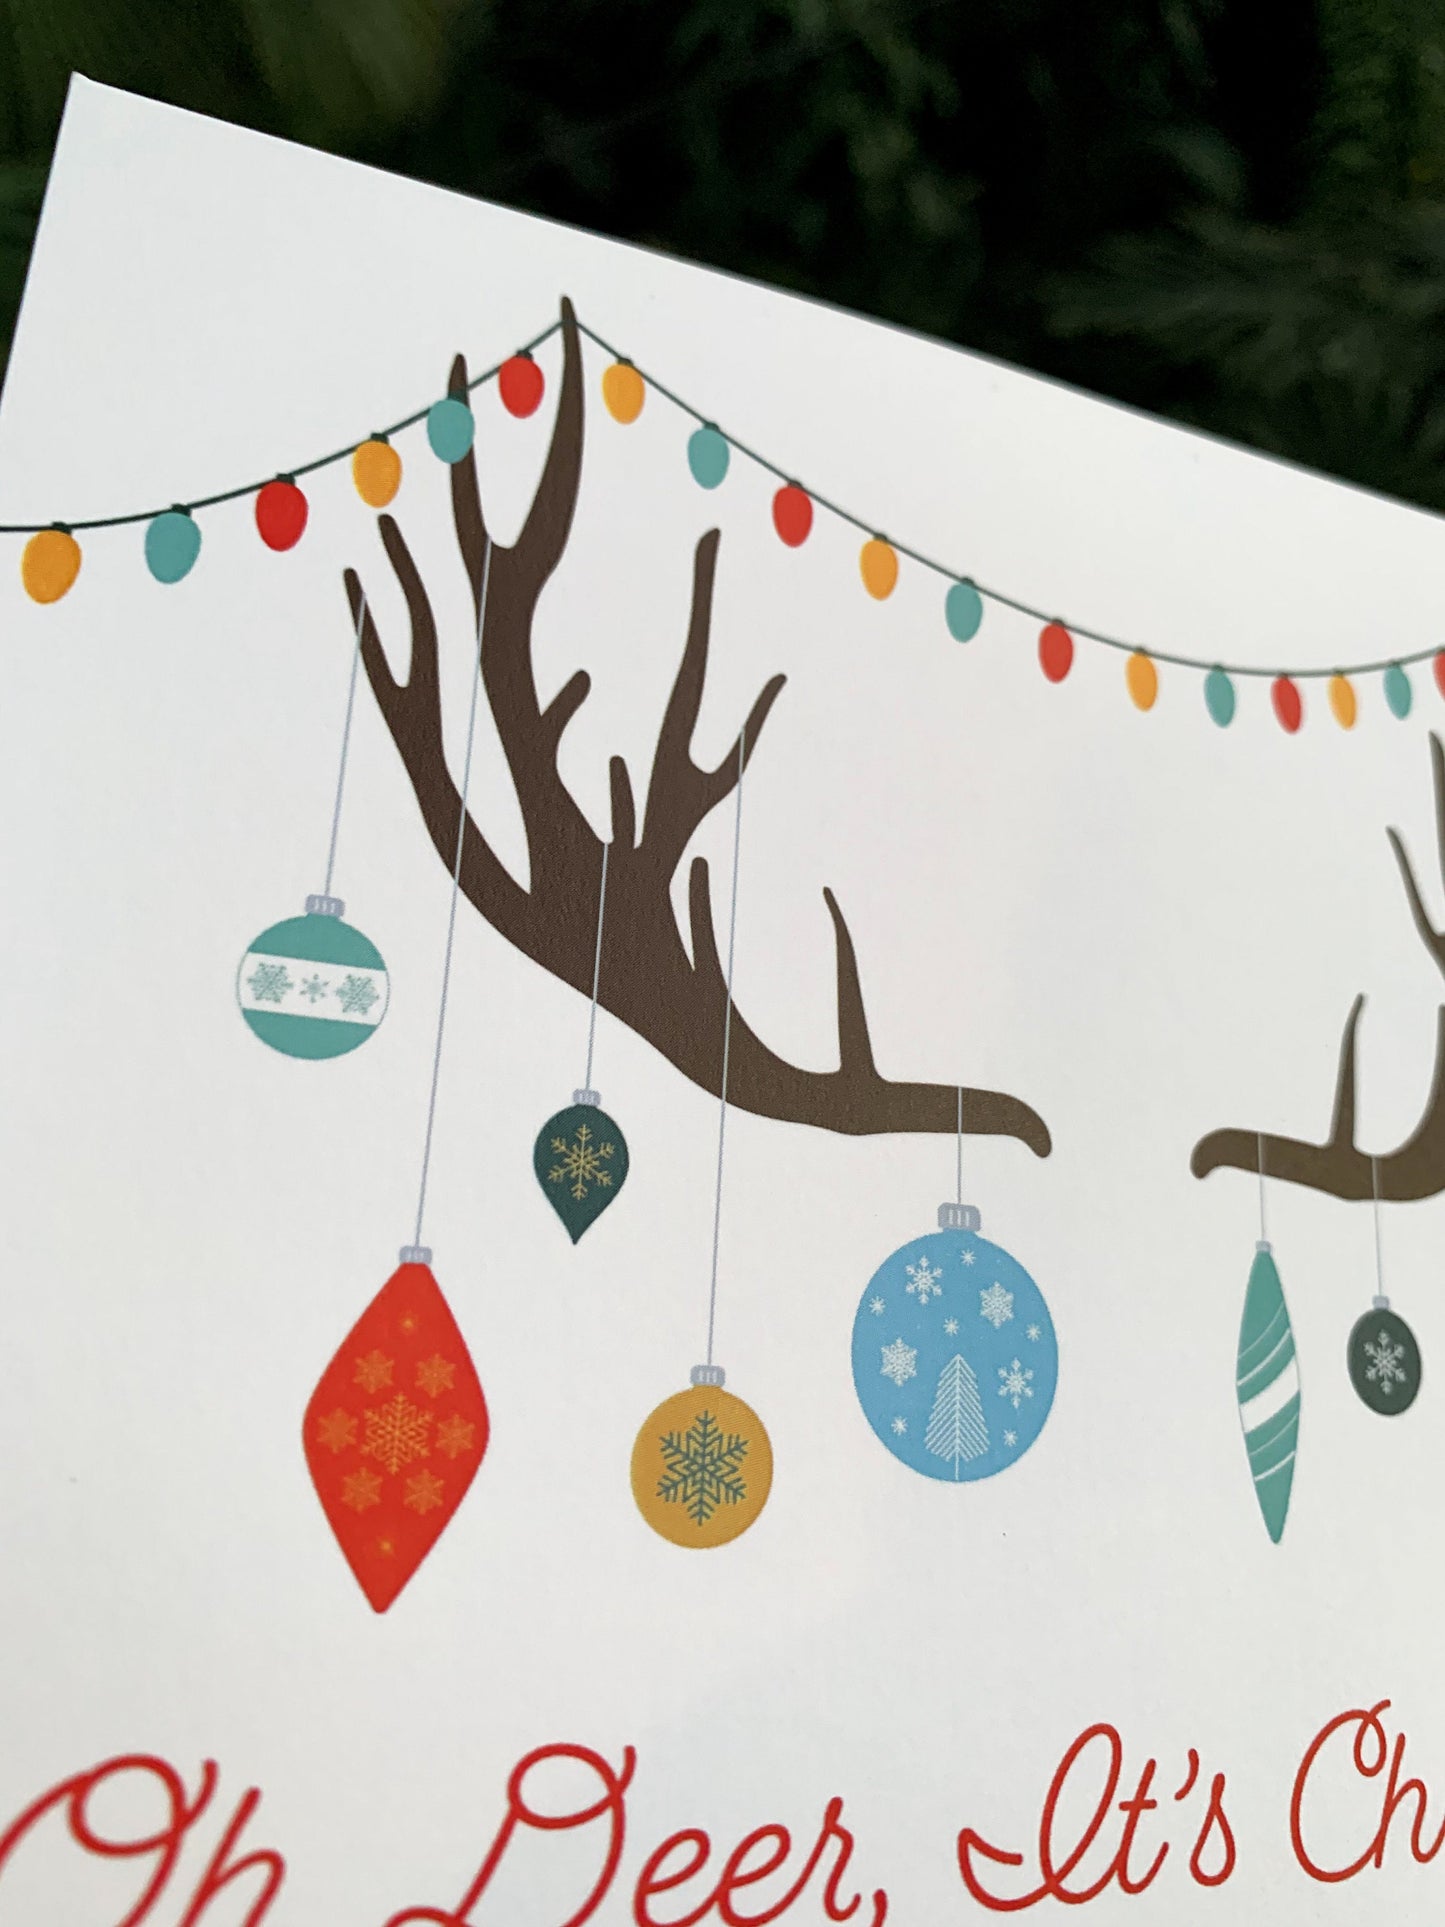 Oh Deer, It's Christmas Cards